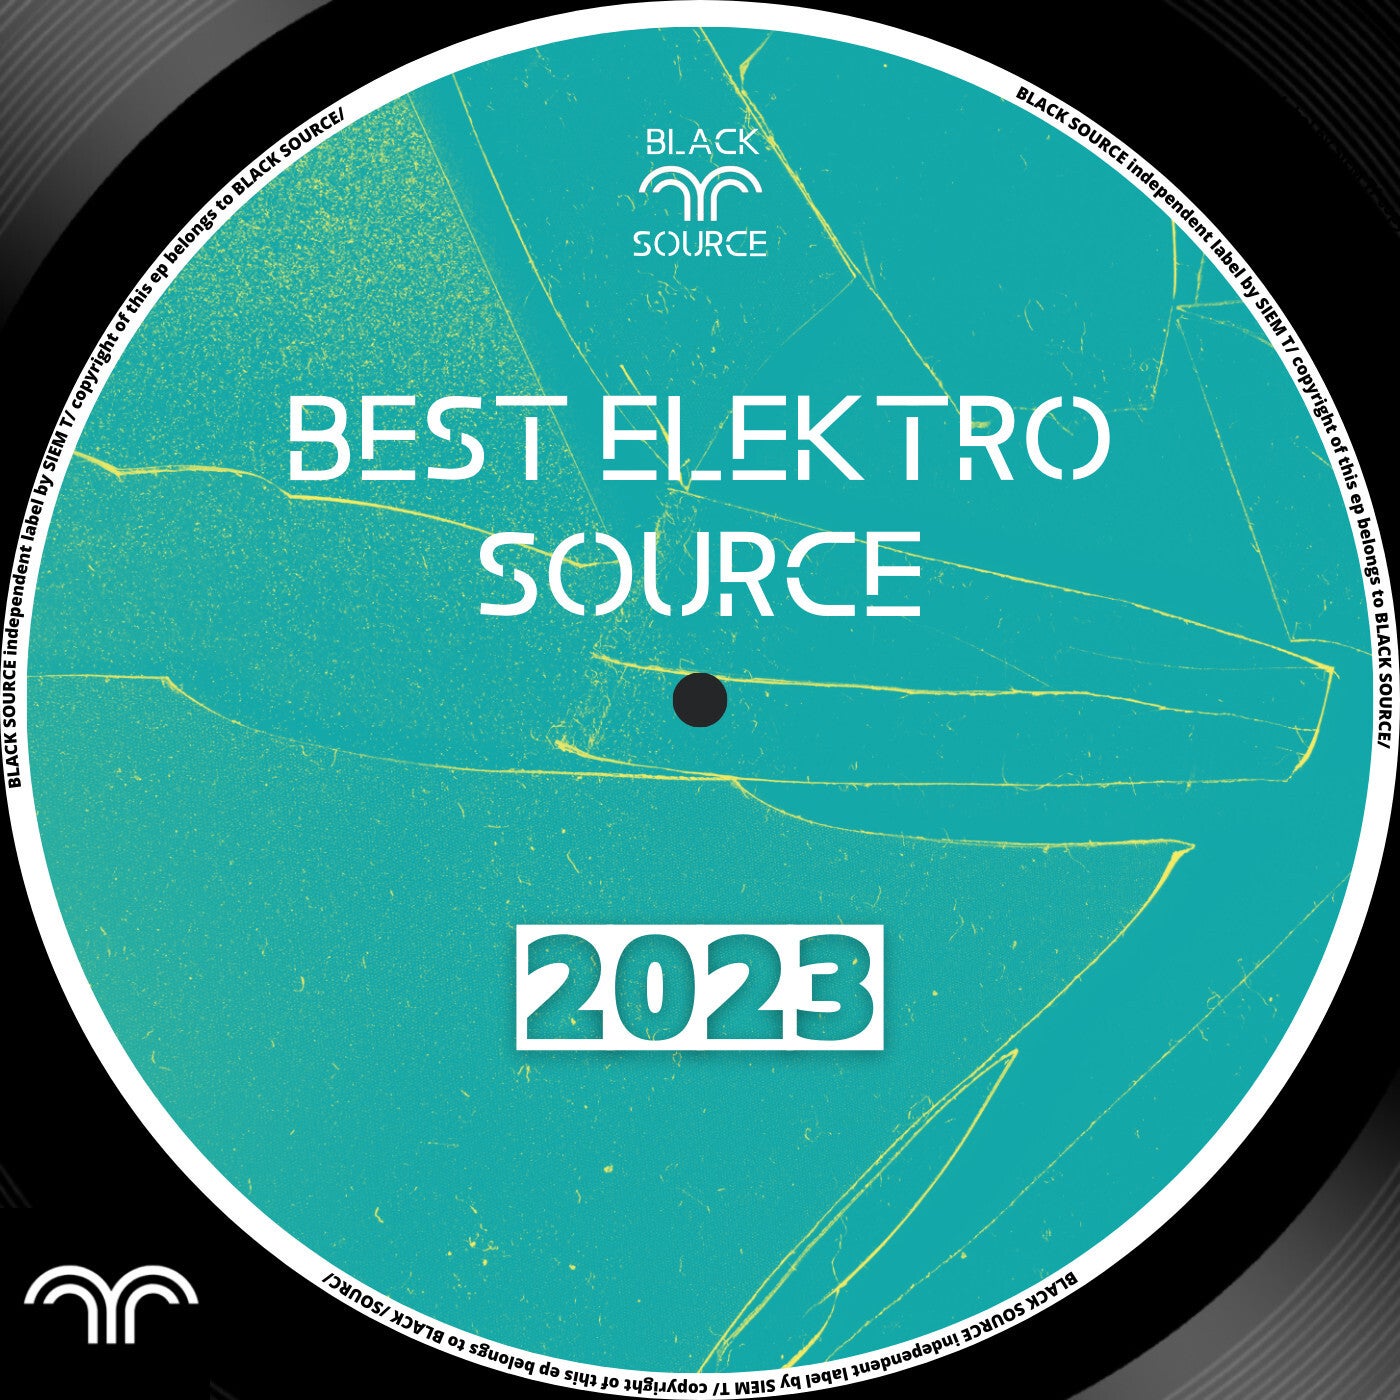 The best elektro source 2023